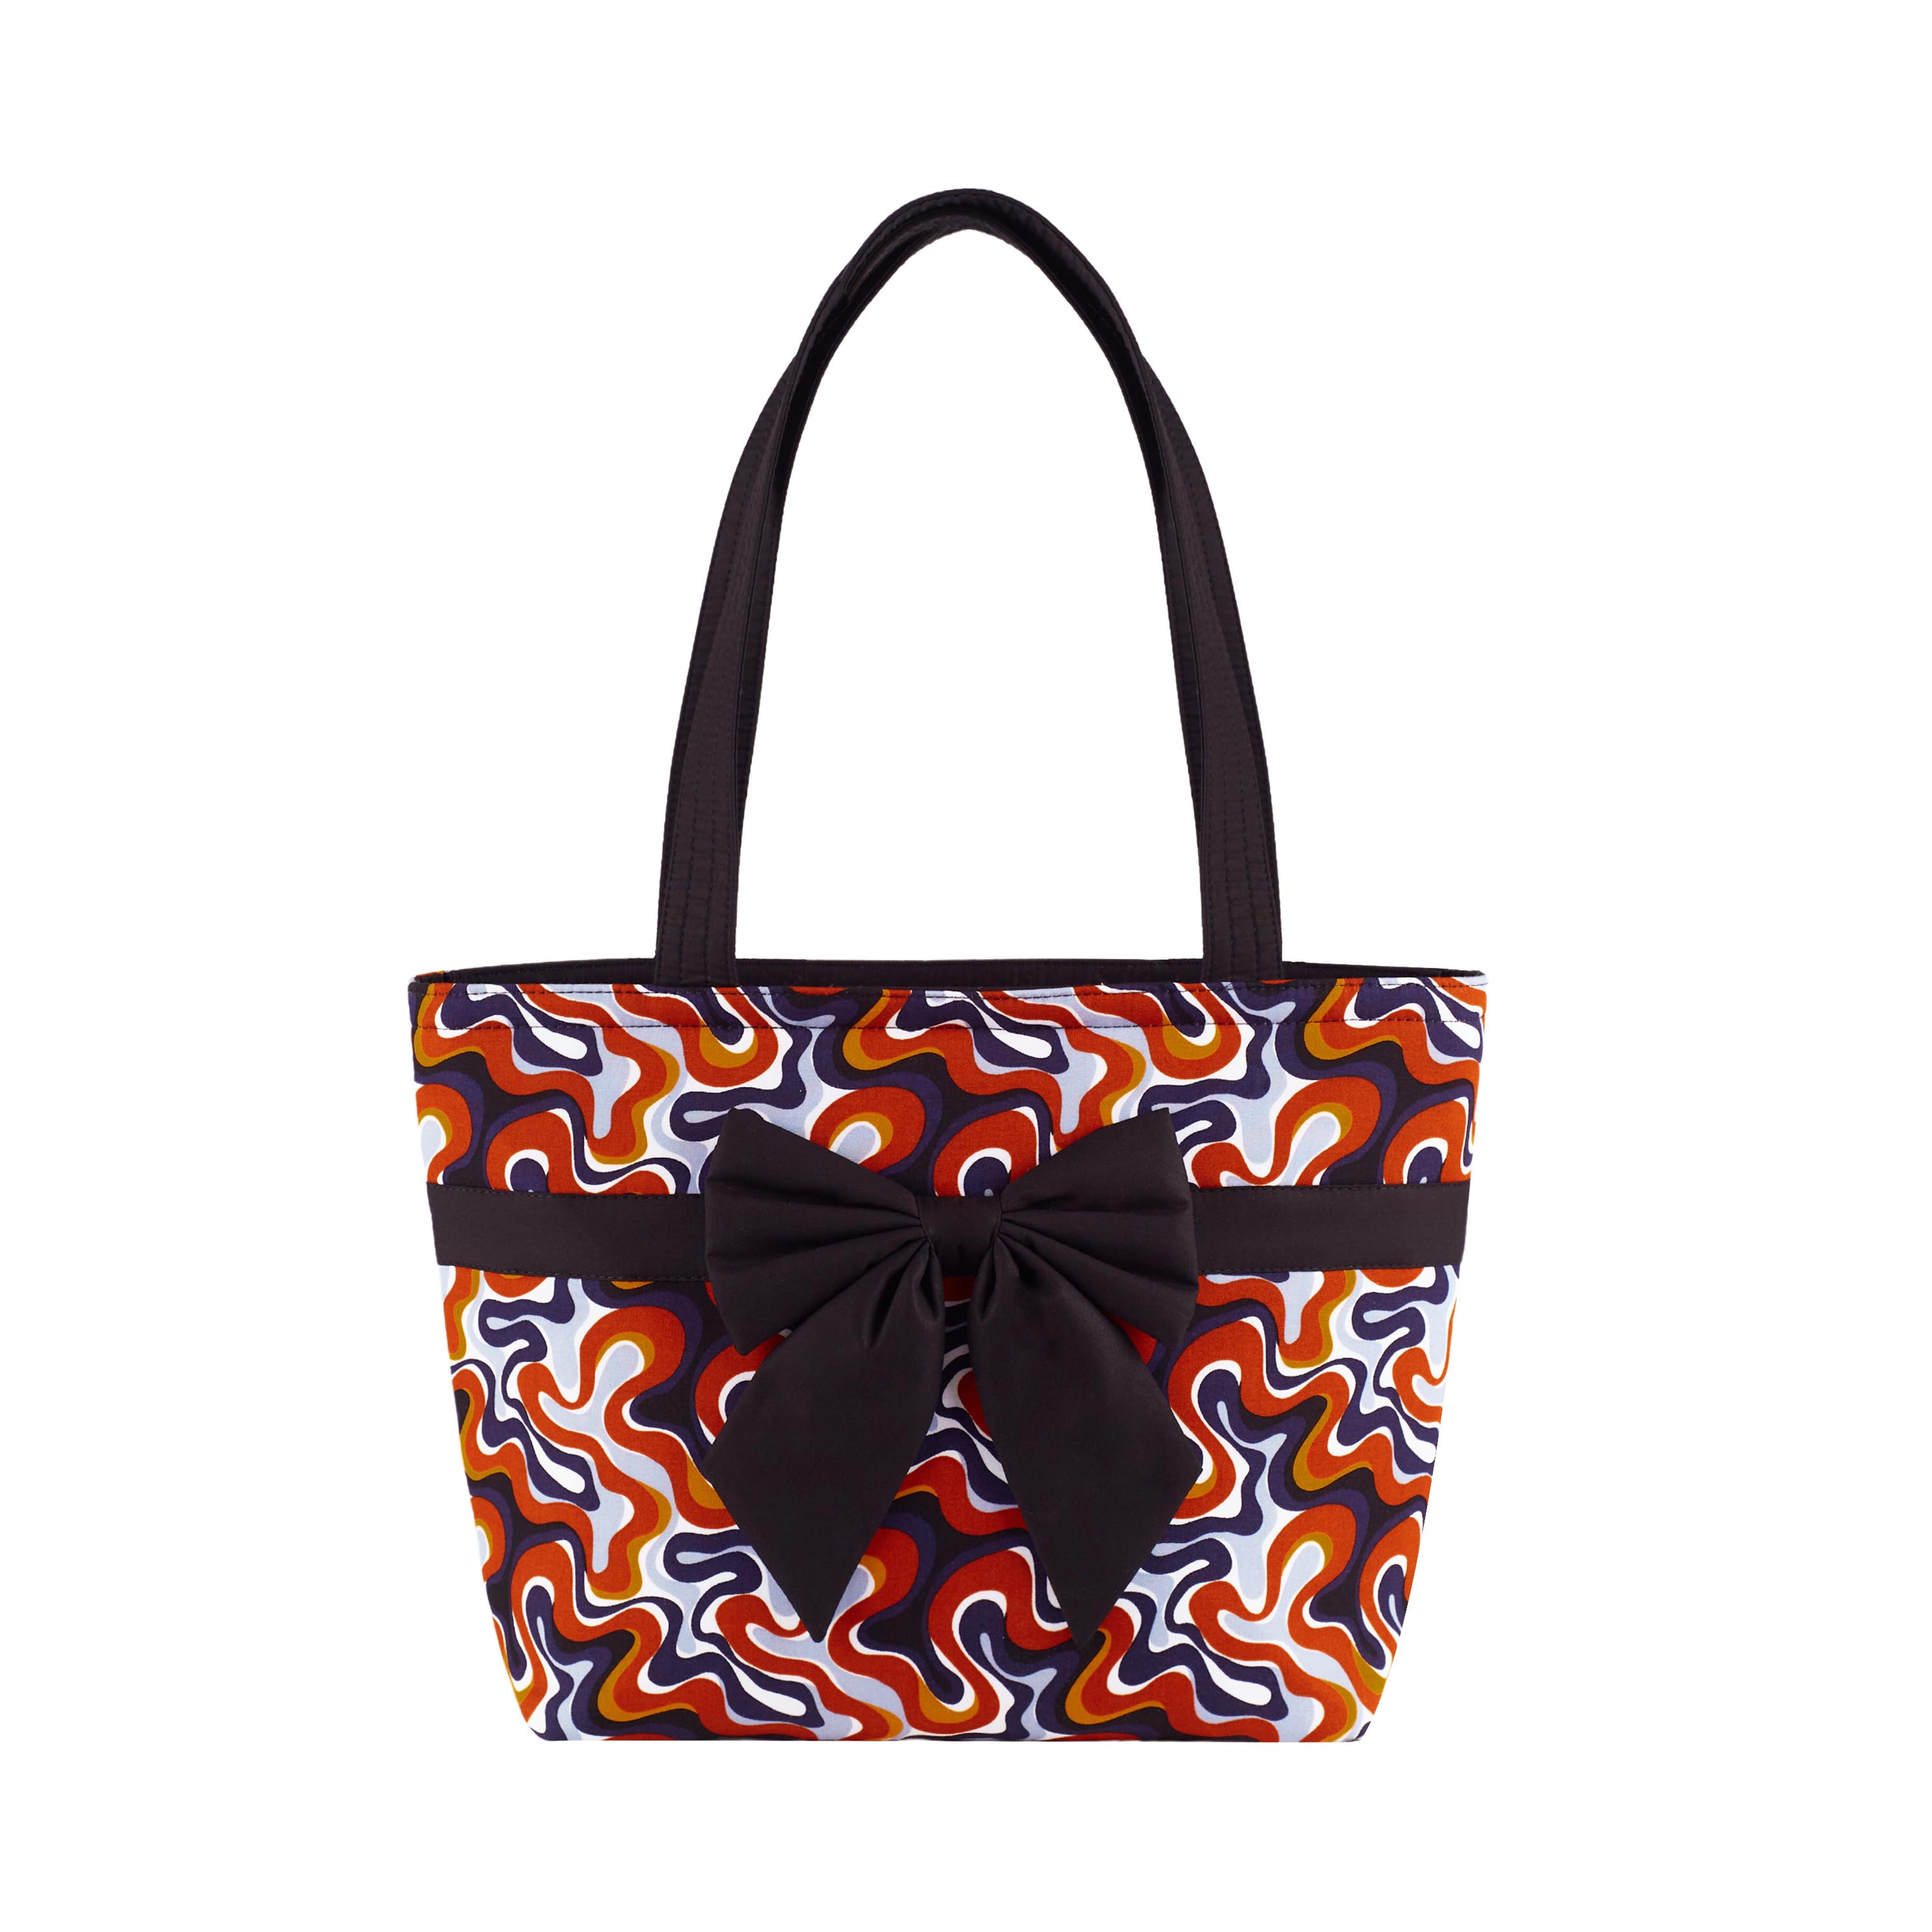 Elegant naraya bag in thailand For Stylish And Trendy Looks 